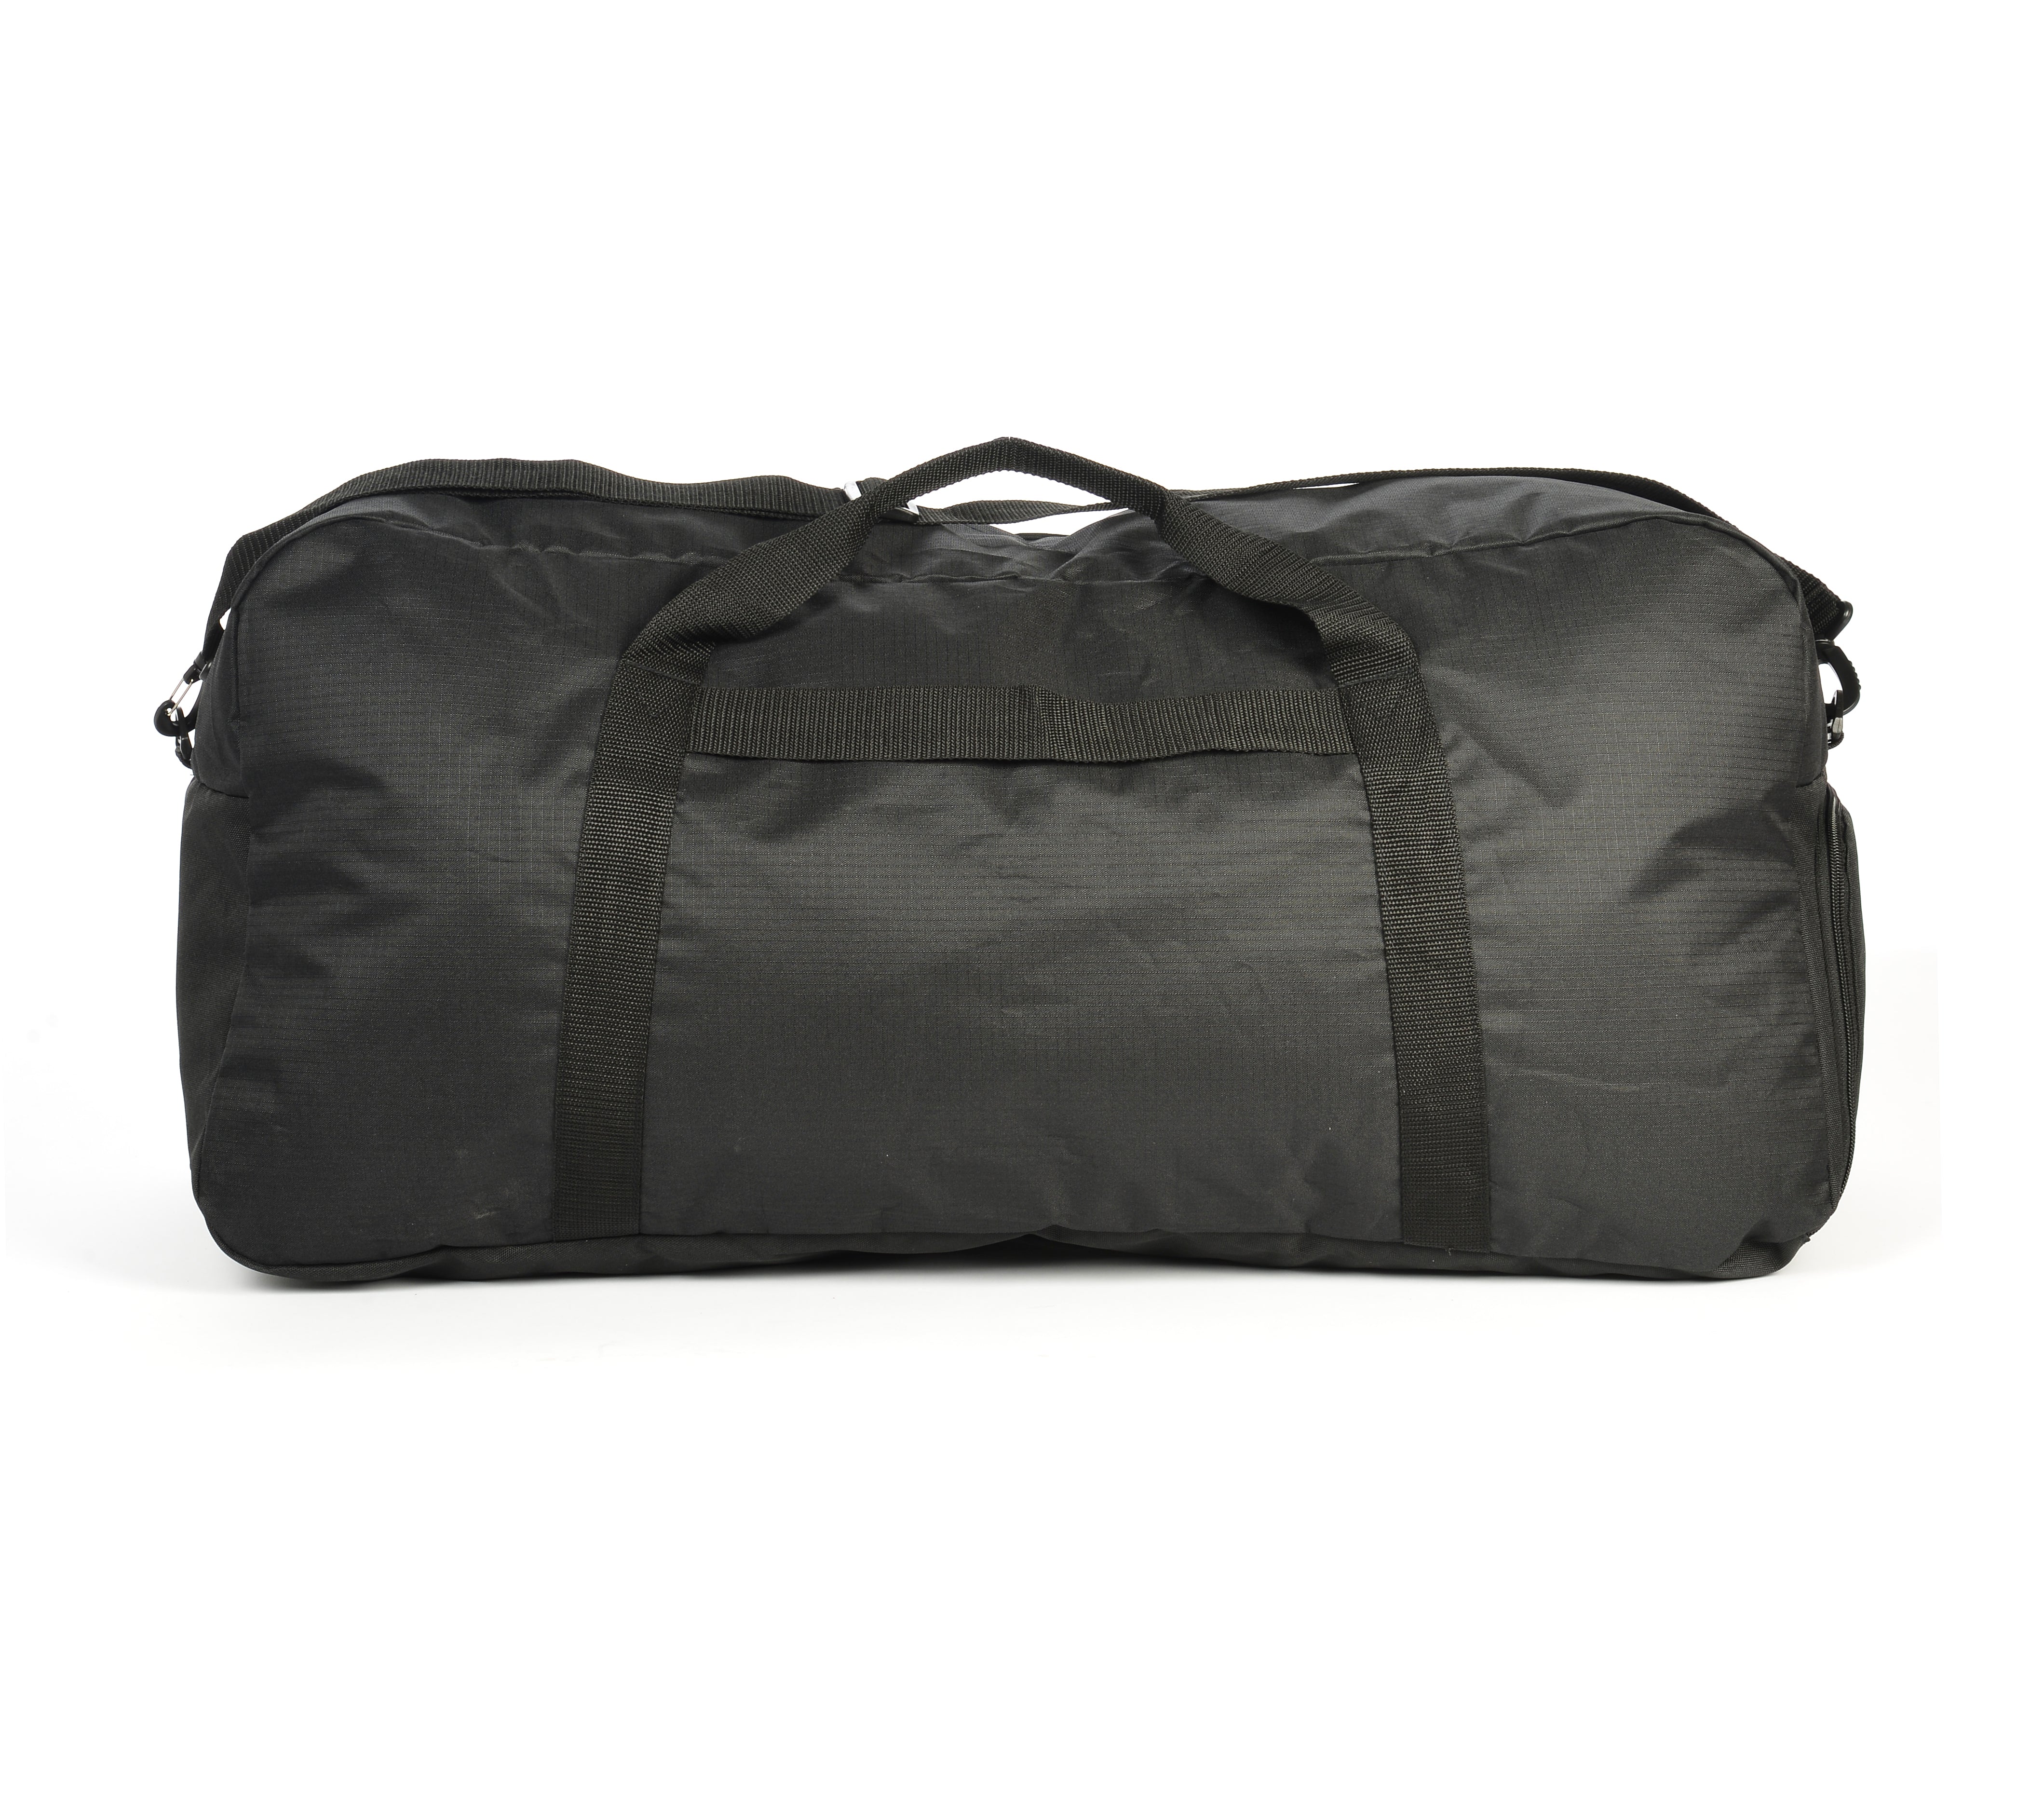 Rugged Foldable Bag 54L Black